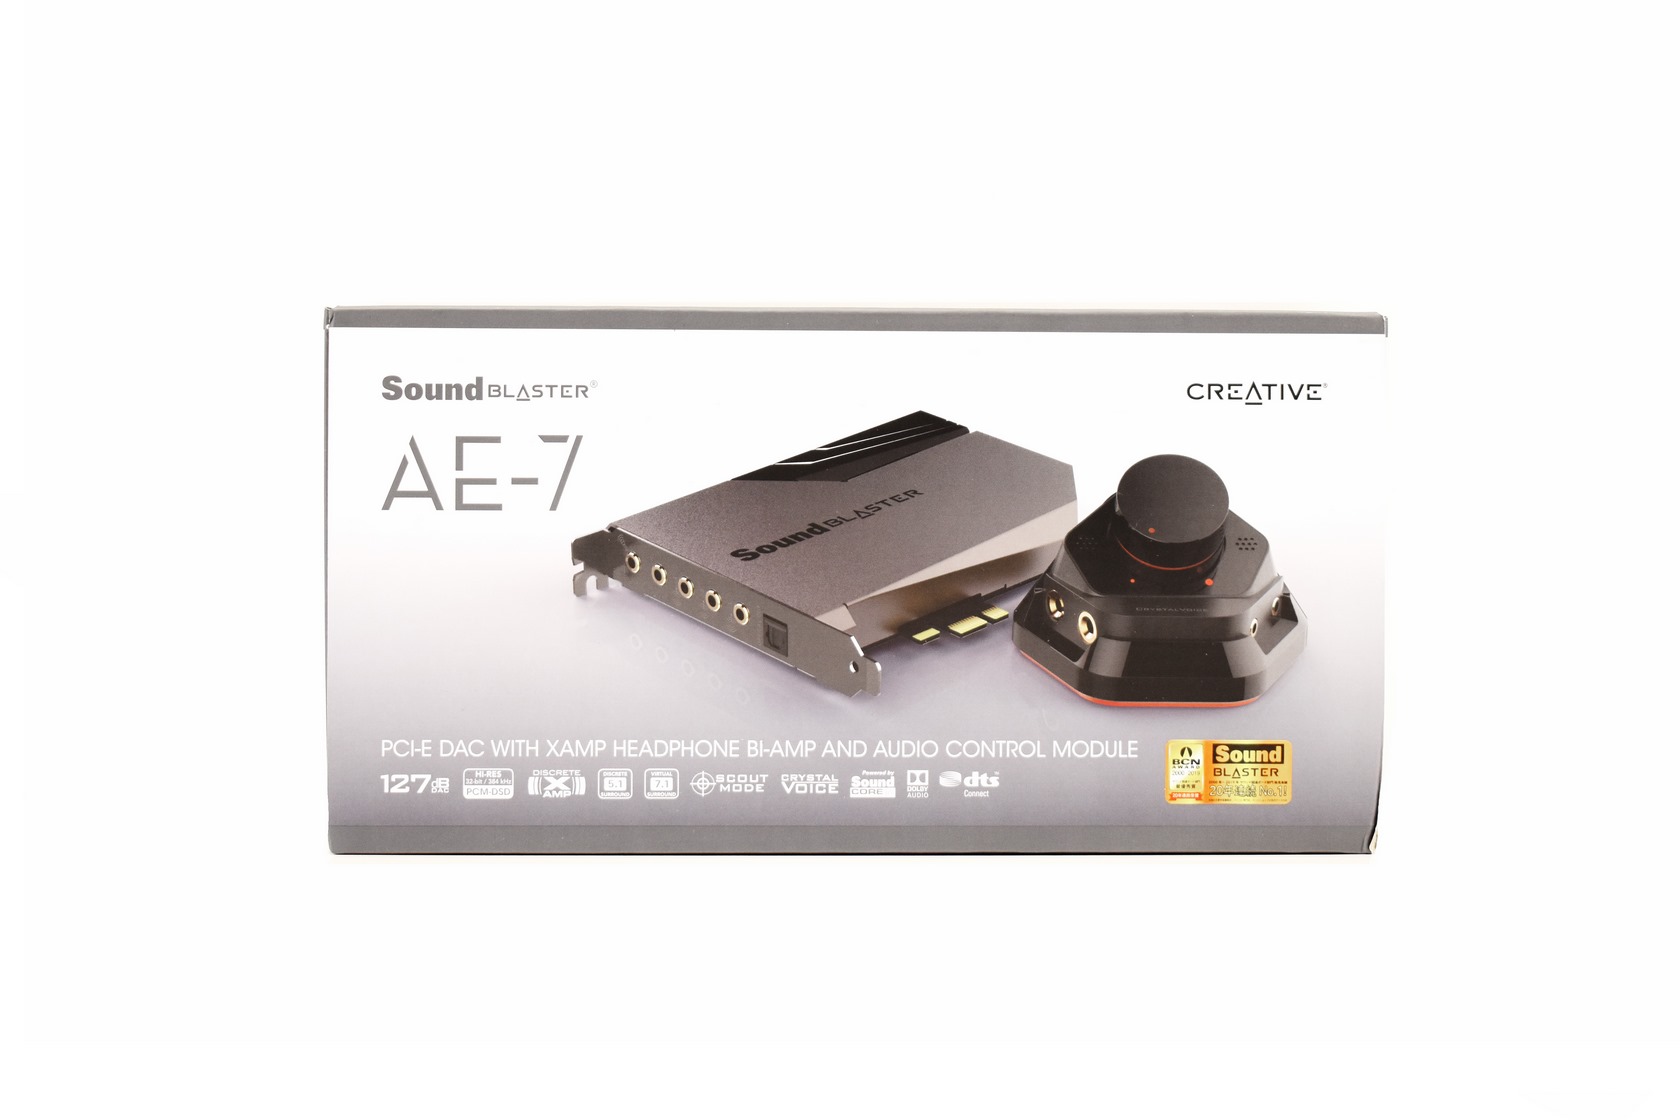 Creative Sound Blaster Ae 7 Pcie Sound Card Review